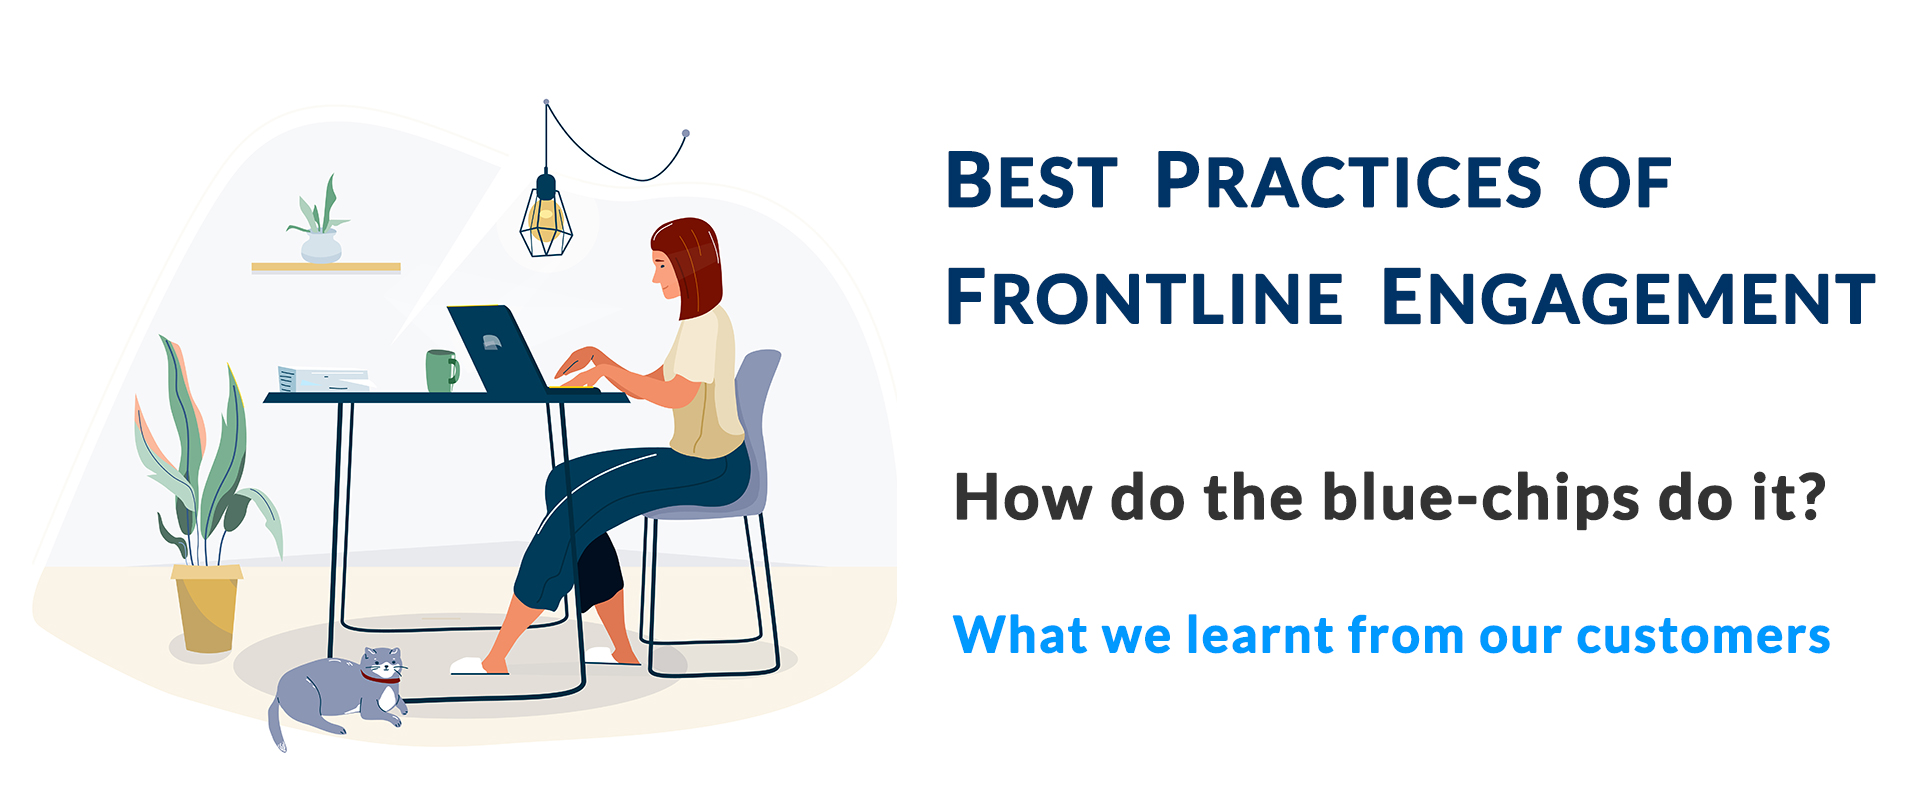 best practices of frontline engagement